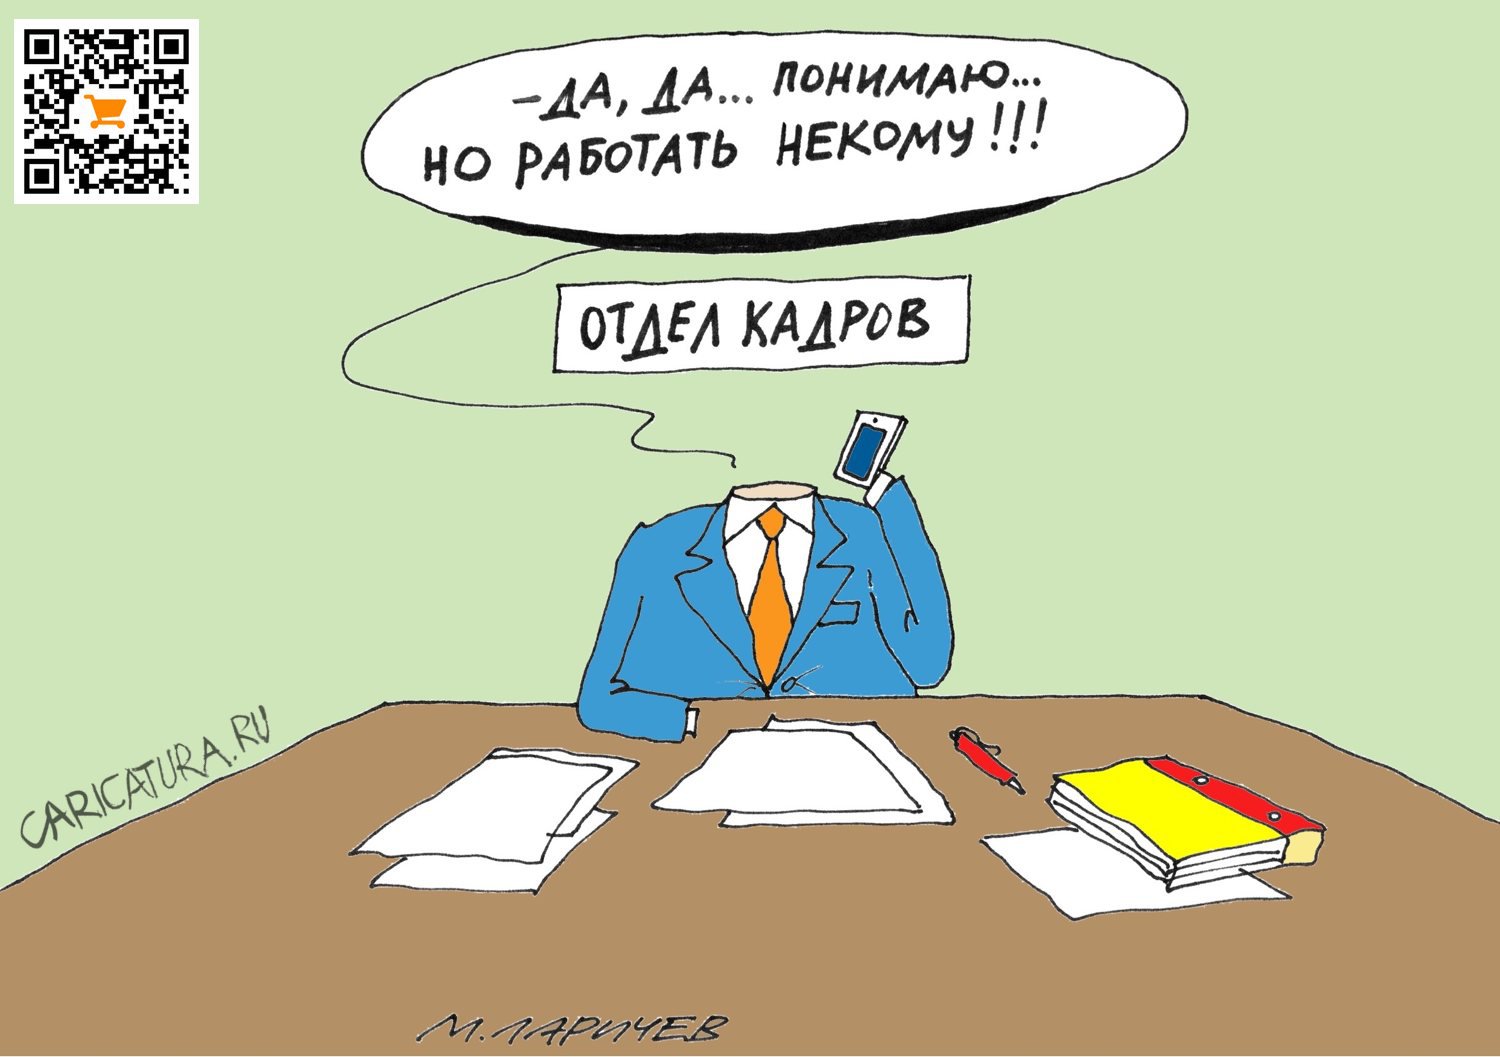 Карикатура "Отток кадров", Михаил Ларичев